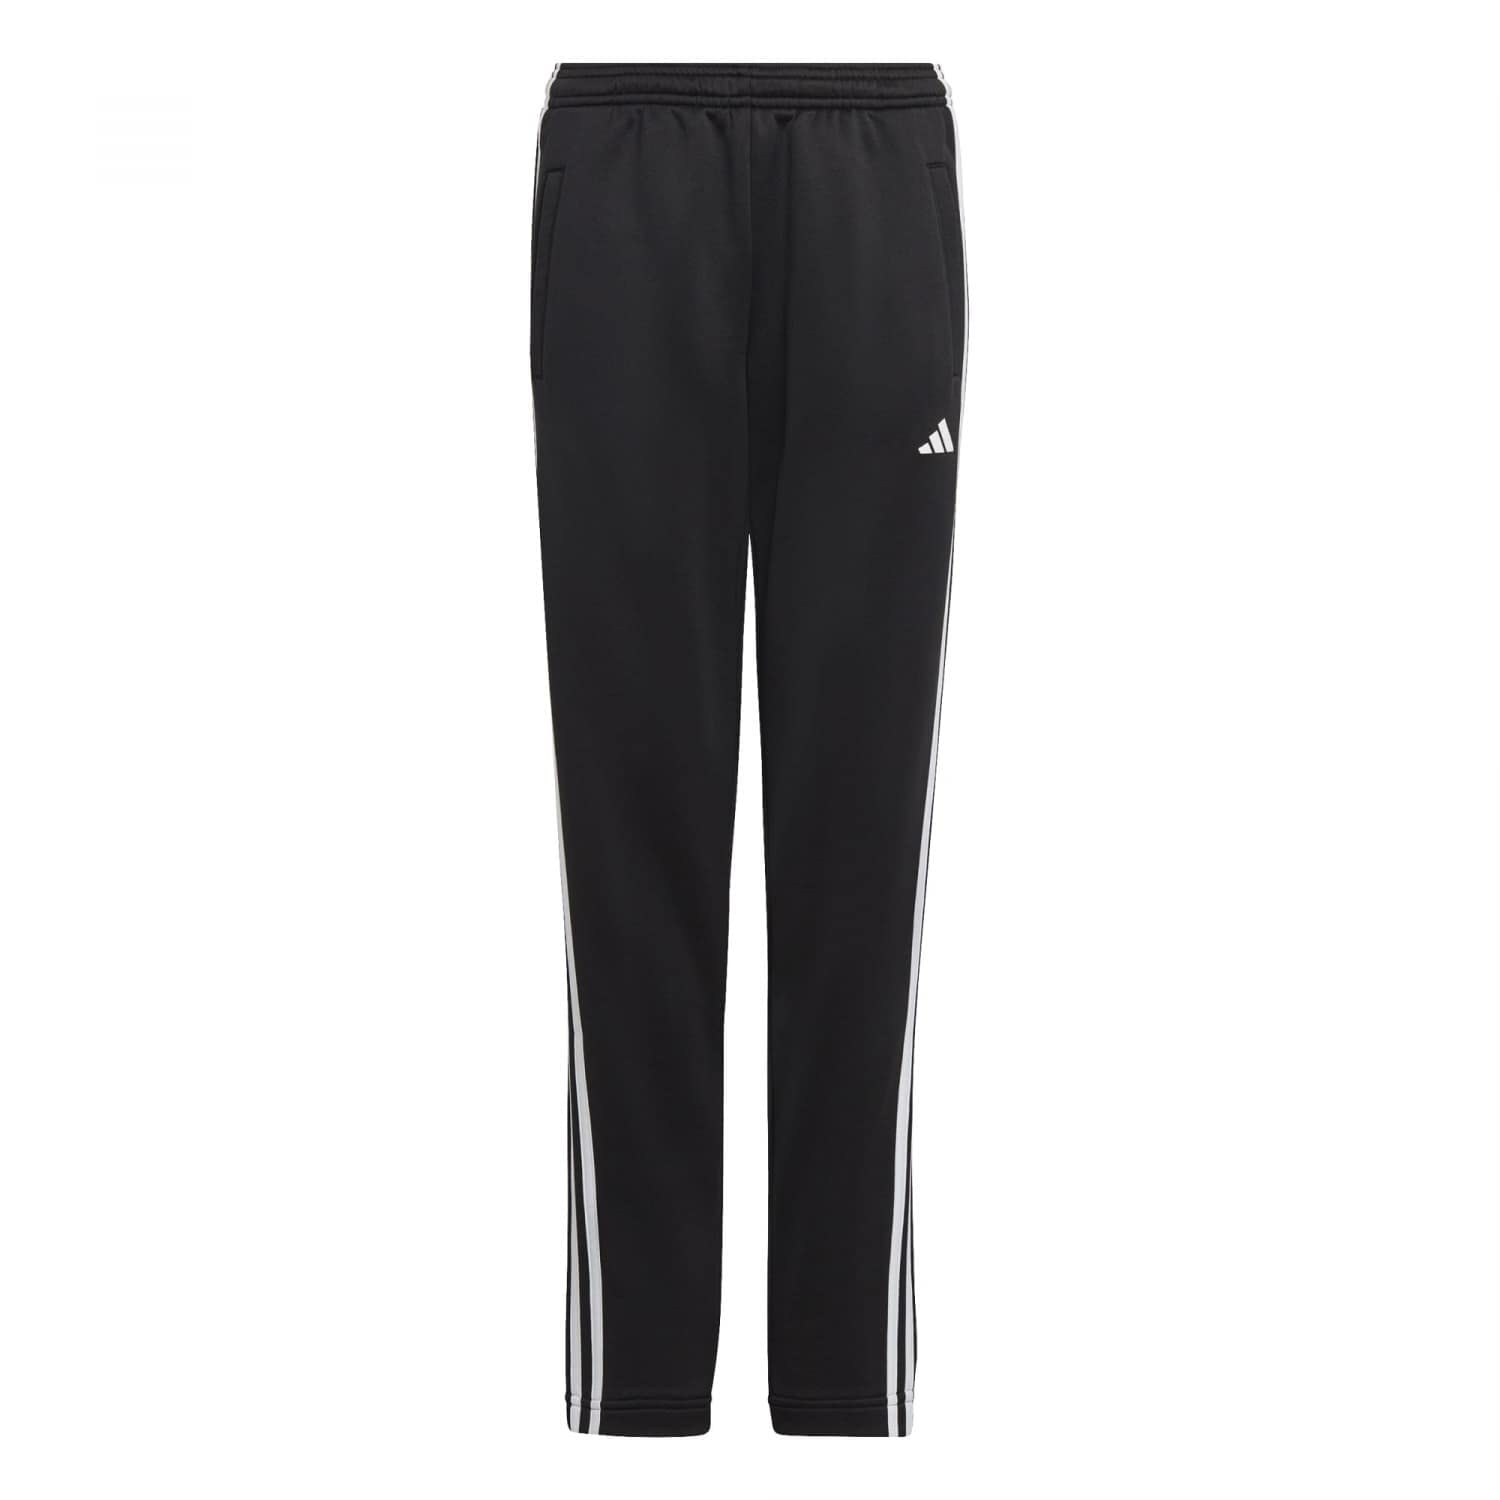 Adidas Unisex Kinder Pants (1/1) U Tr-Es 3S Pant, Black/White, HY1098, 164